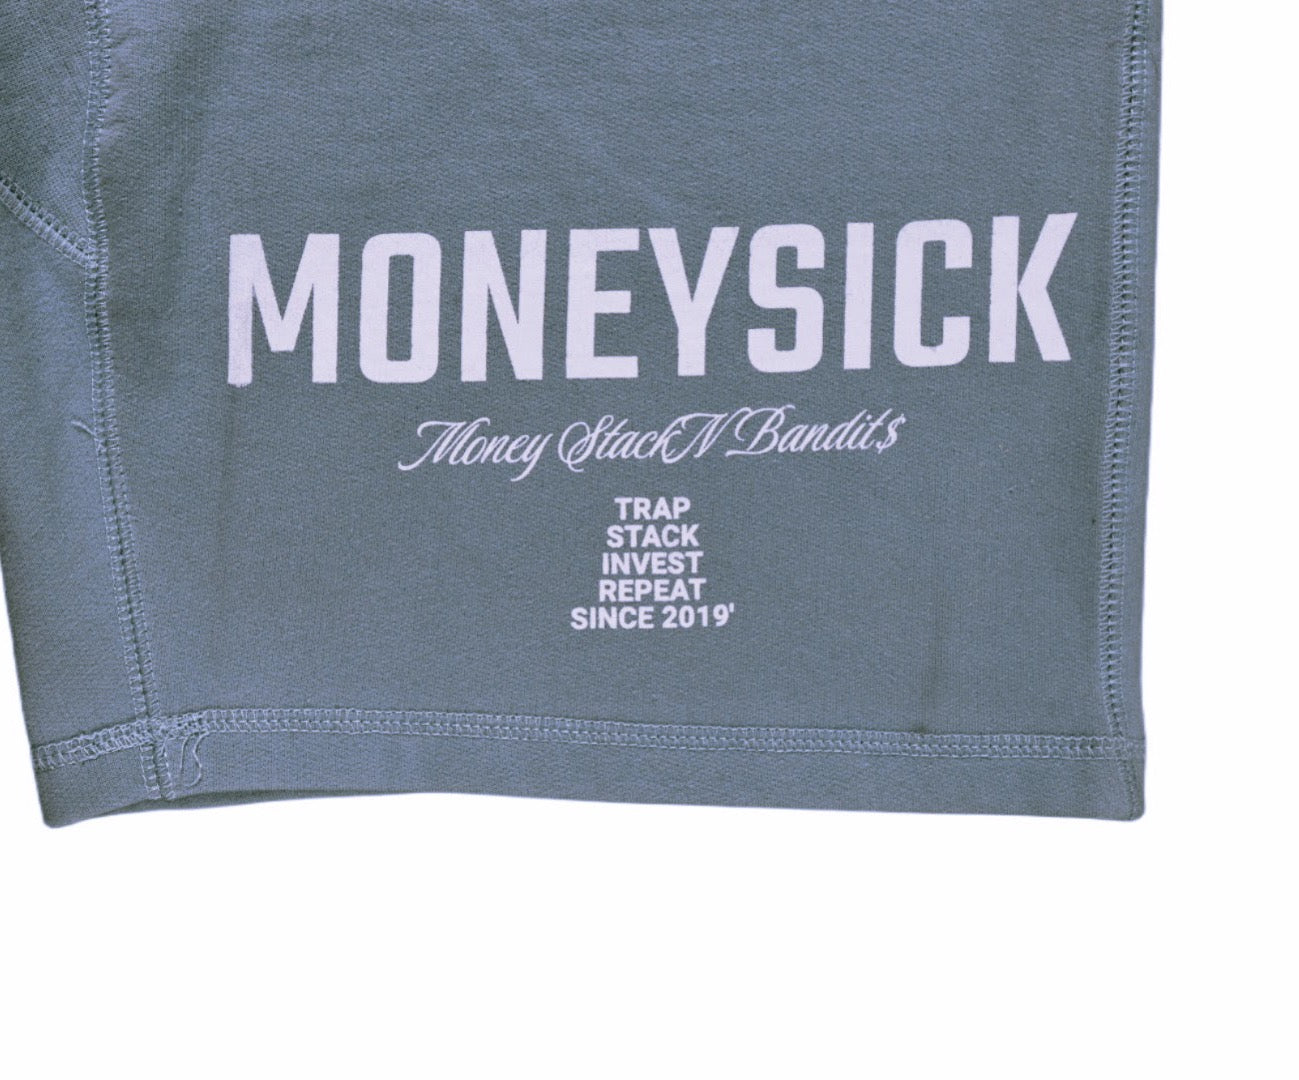 Moneysick Shorts